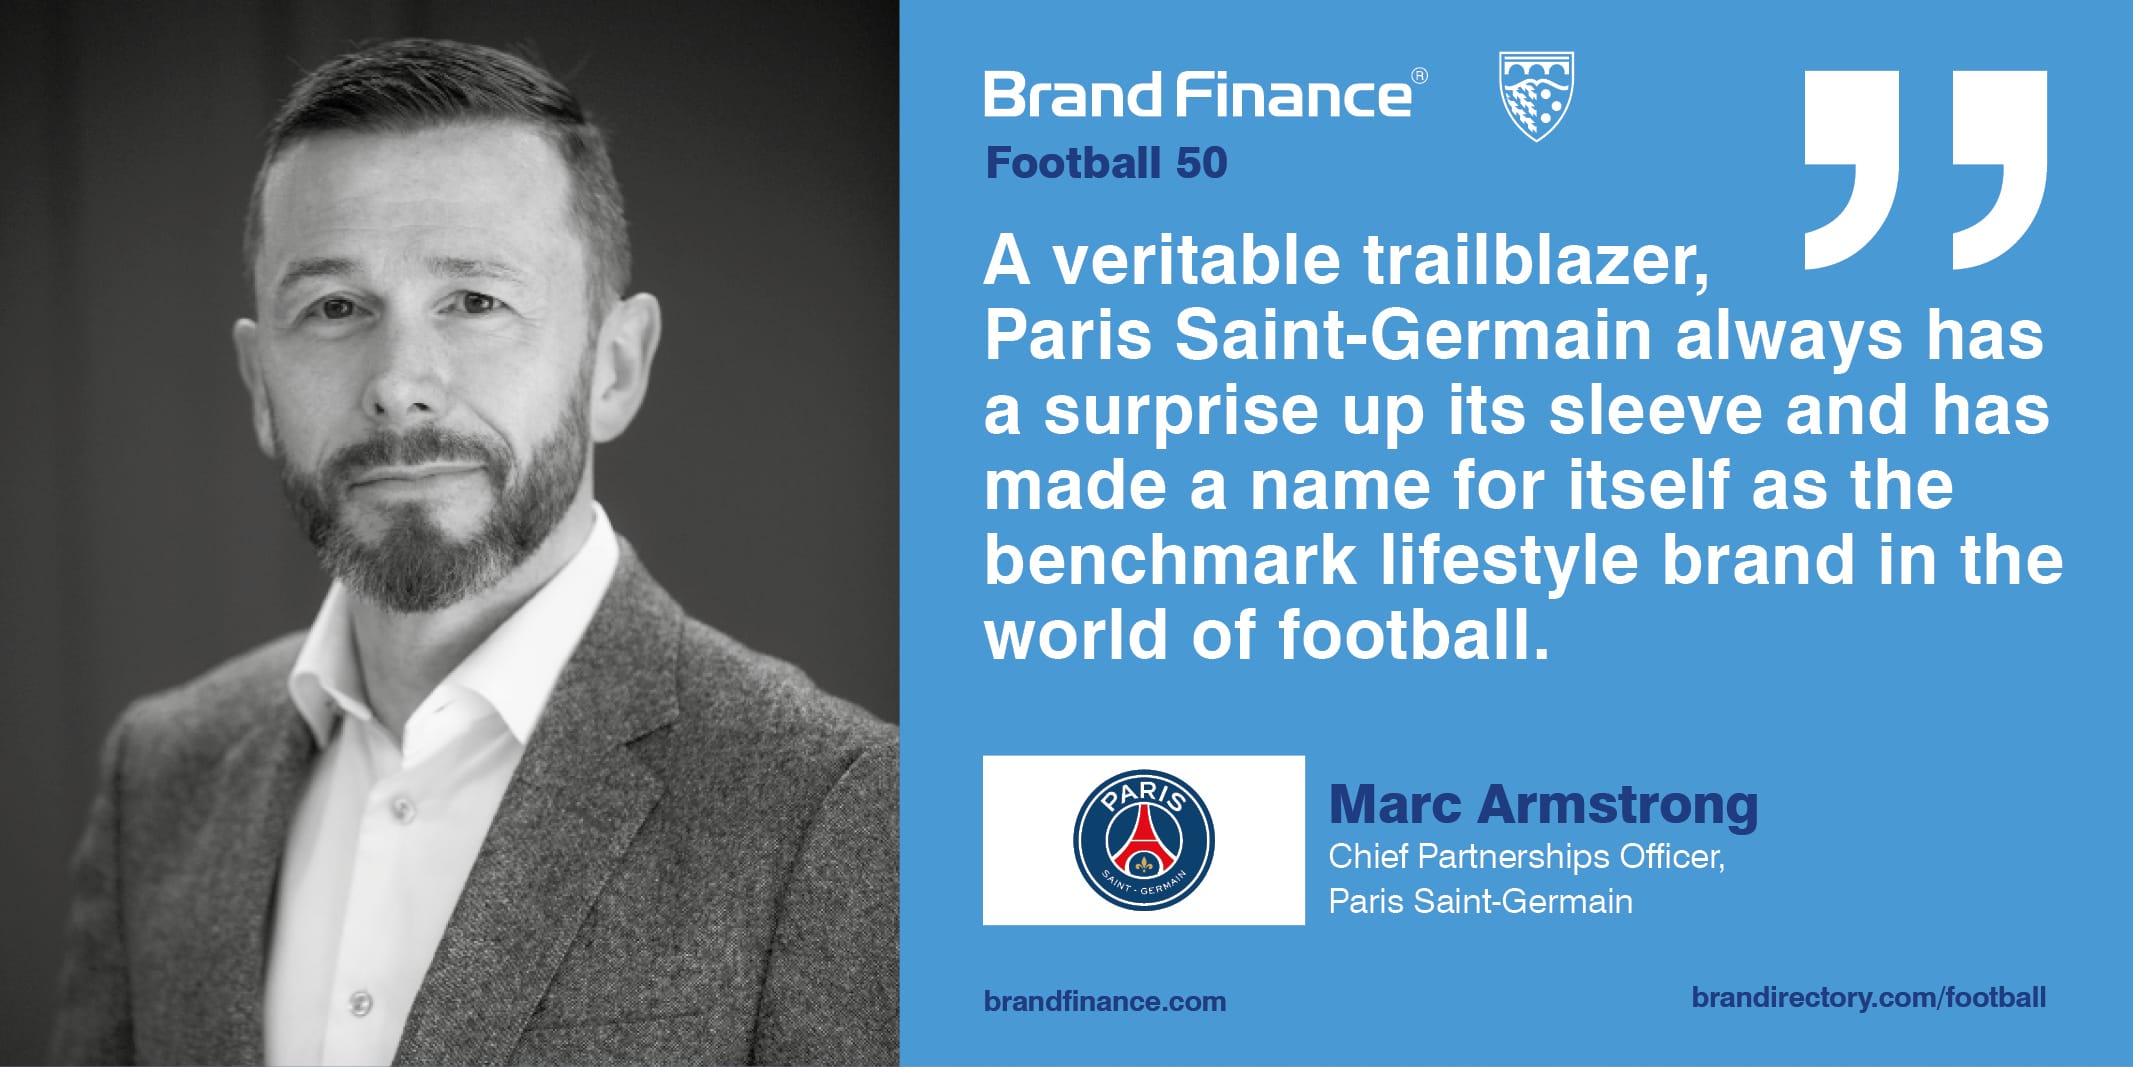 Marc Armstrong, Chief Partnerships Officer, Paris Saint-Germain